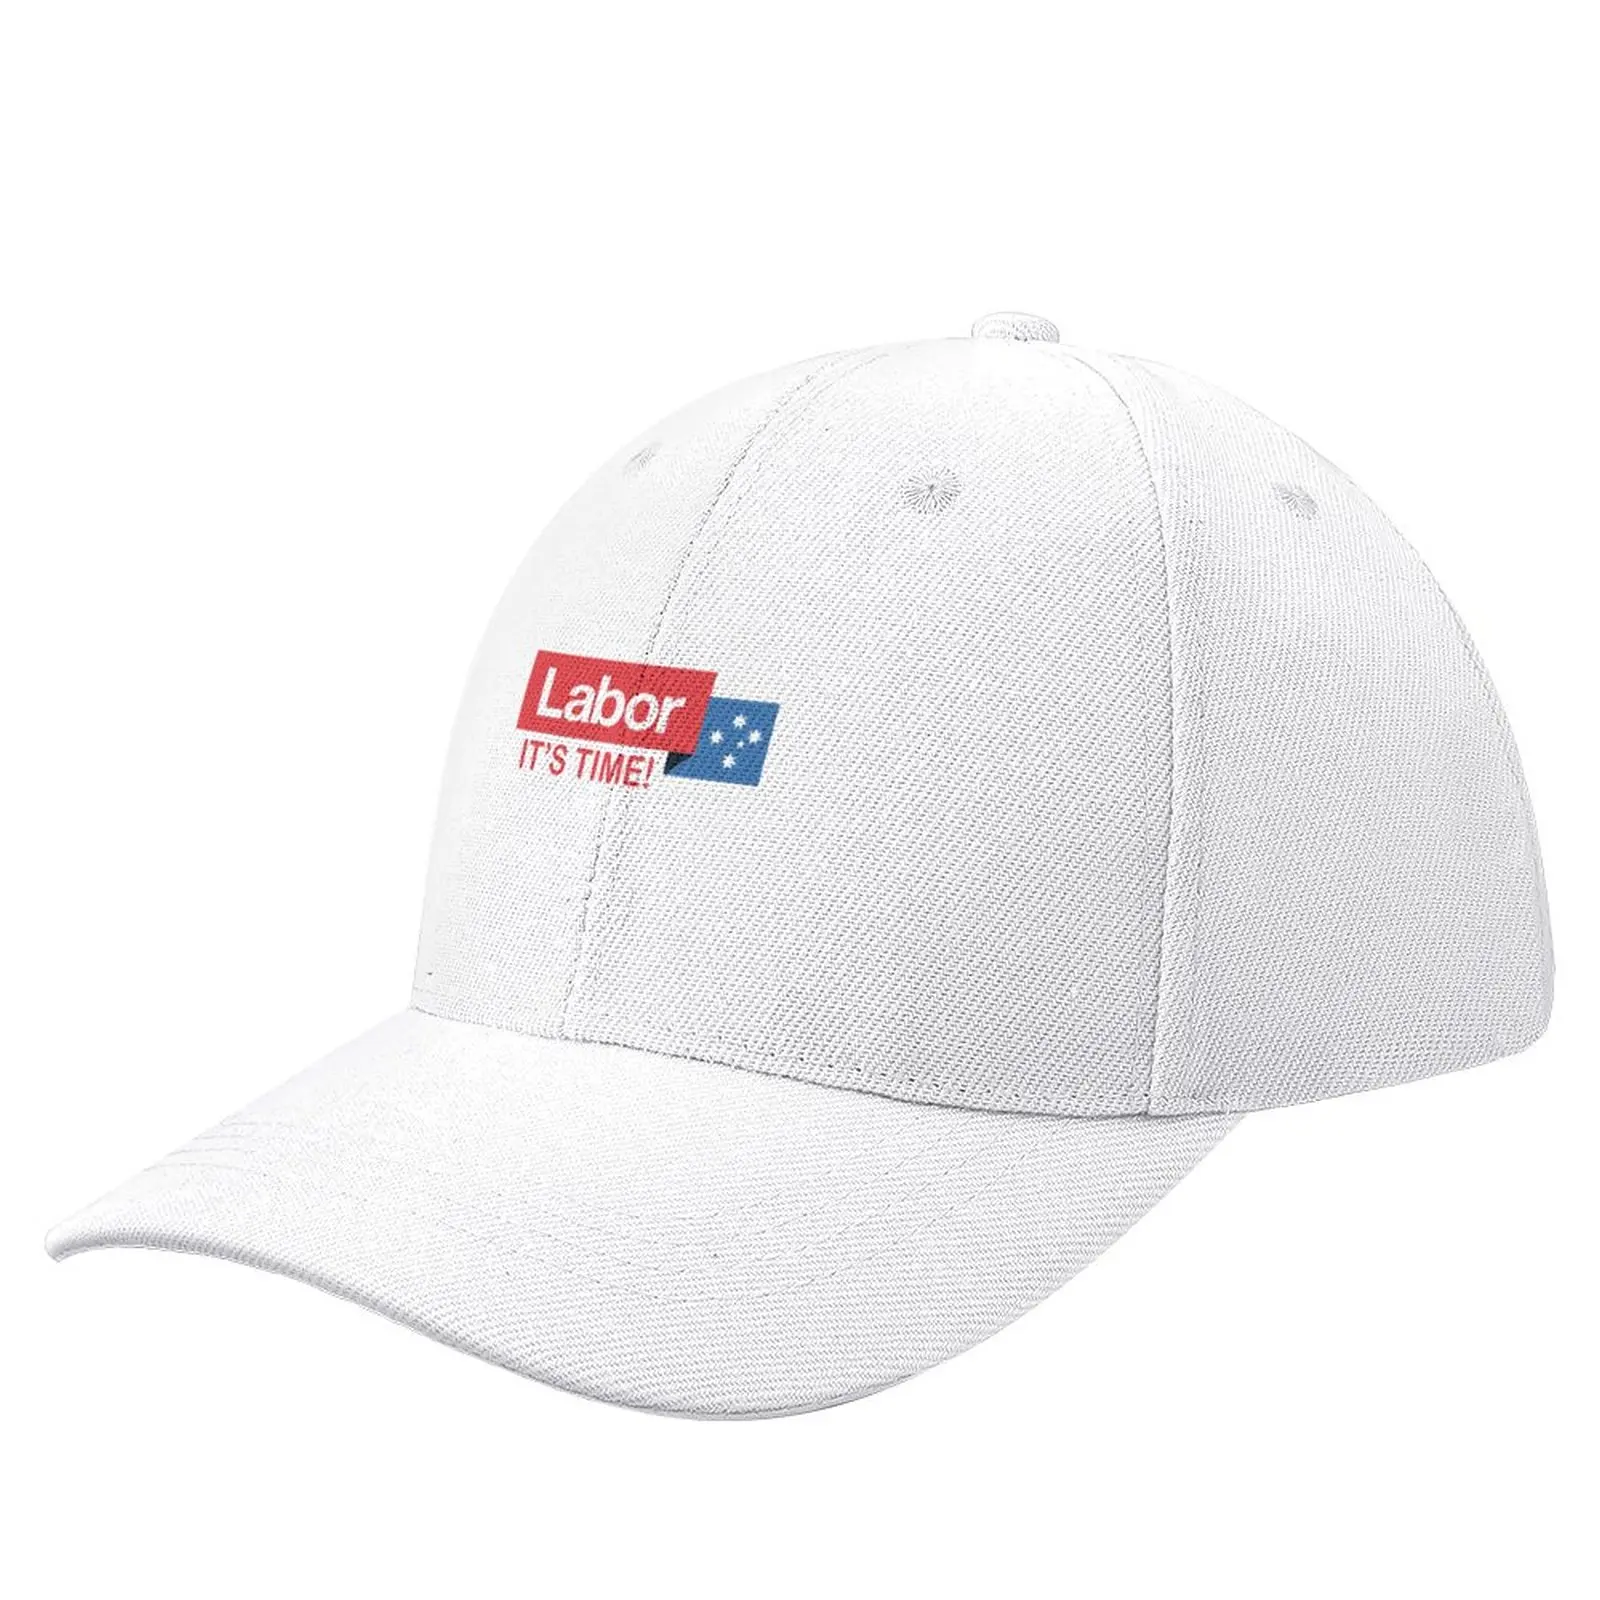 

AUSTRALIAN LABOR PARTY Baseball Cap Golf Cap Golf Luxury Brand funny hat Men Caps Women's